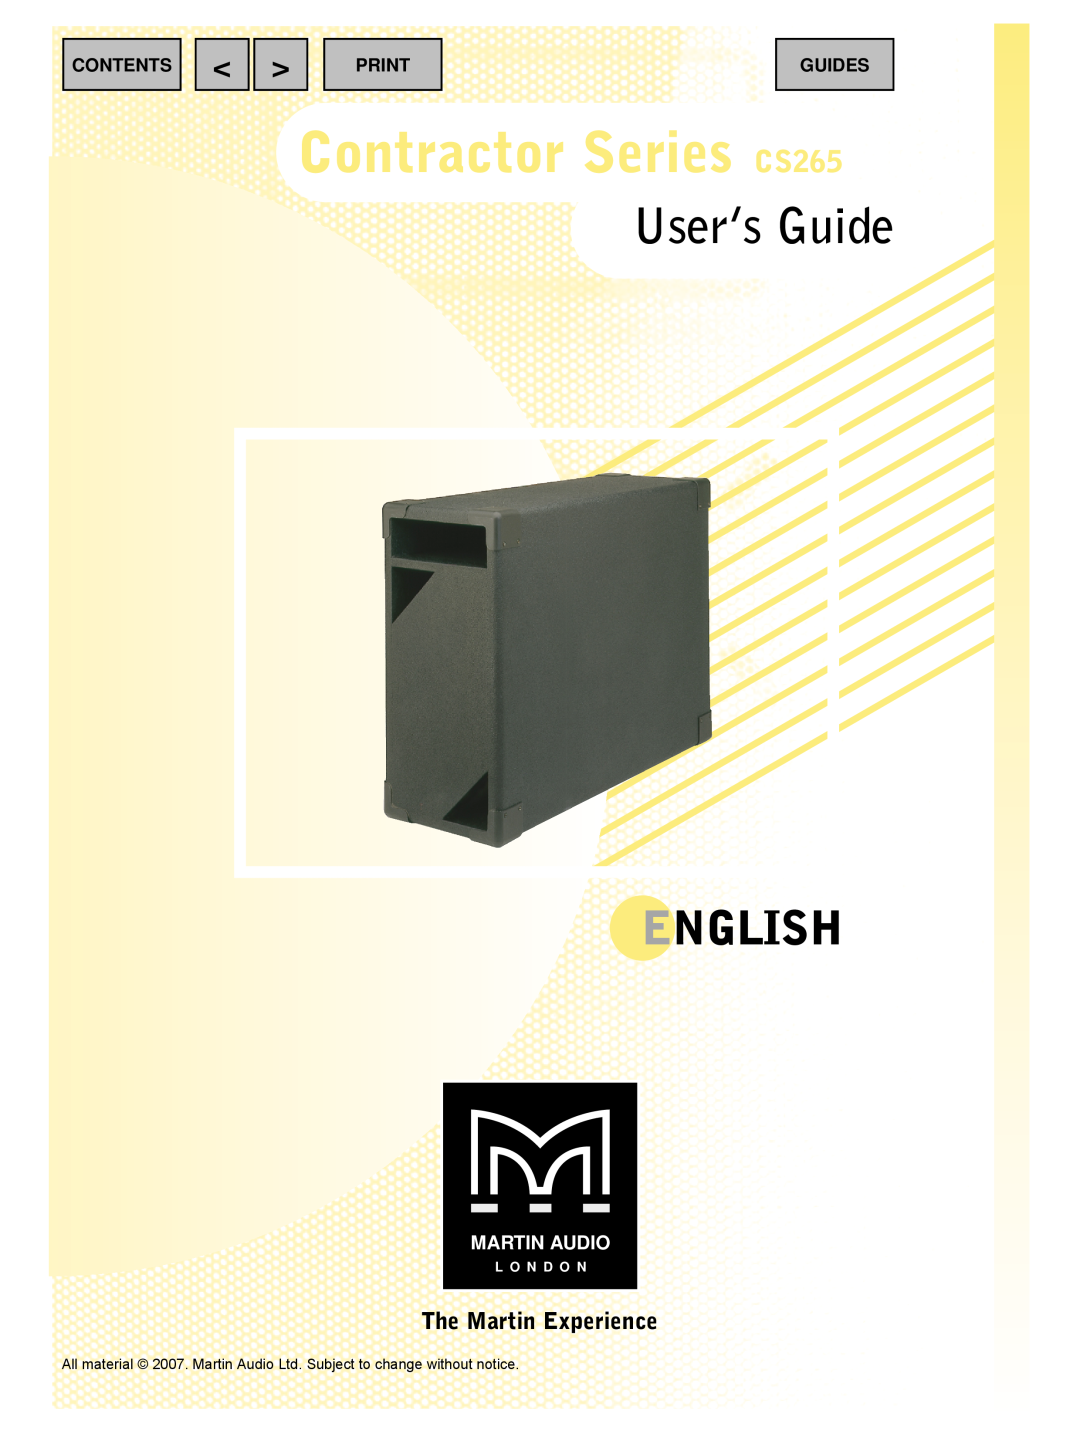 Martin Audio Contractor Series CS265, User’s Guide, English, The Martin Experience, Martin Audio, Contents, Print 